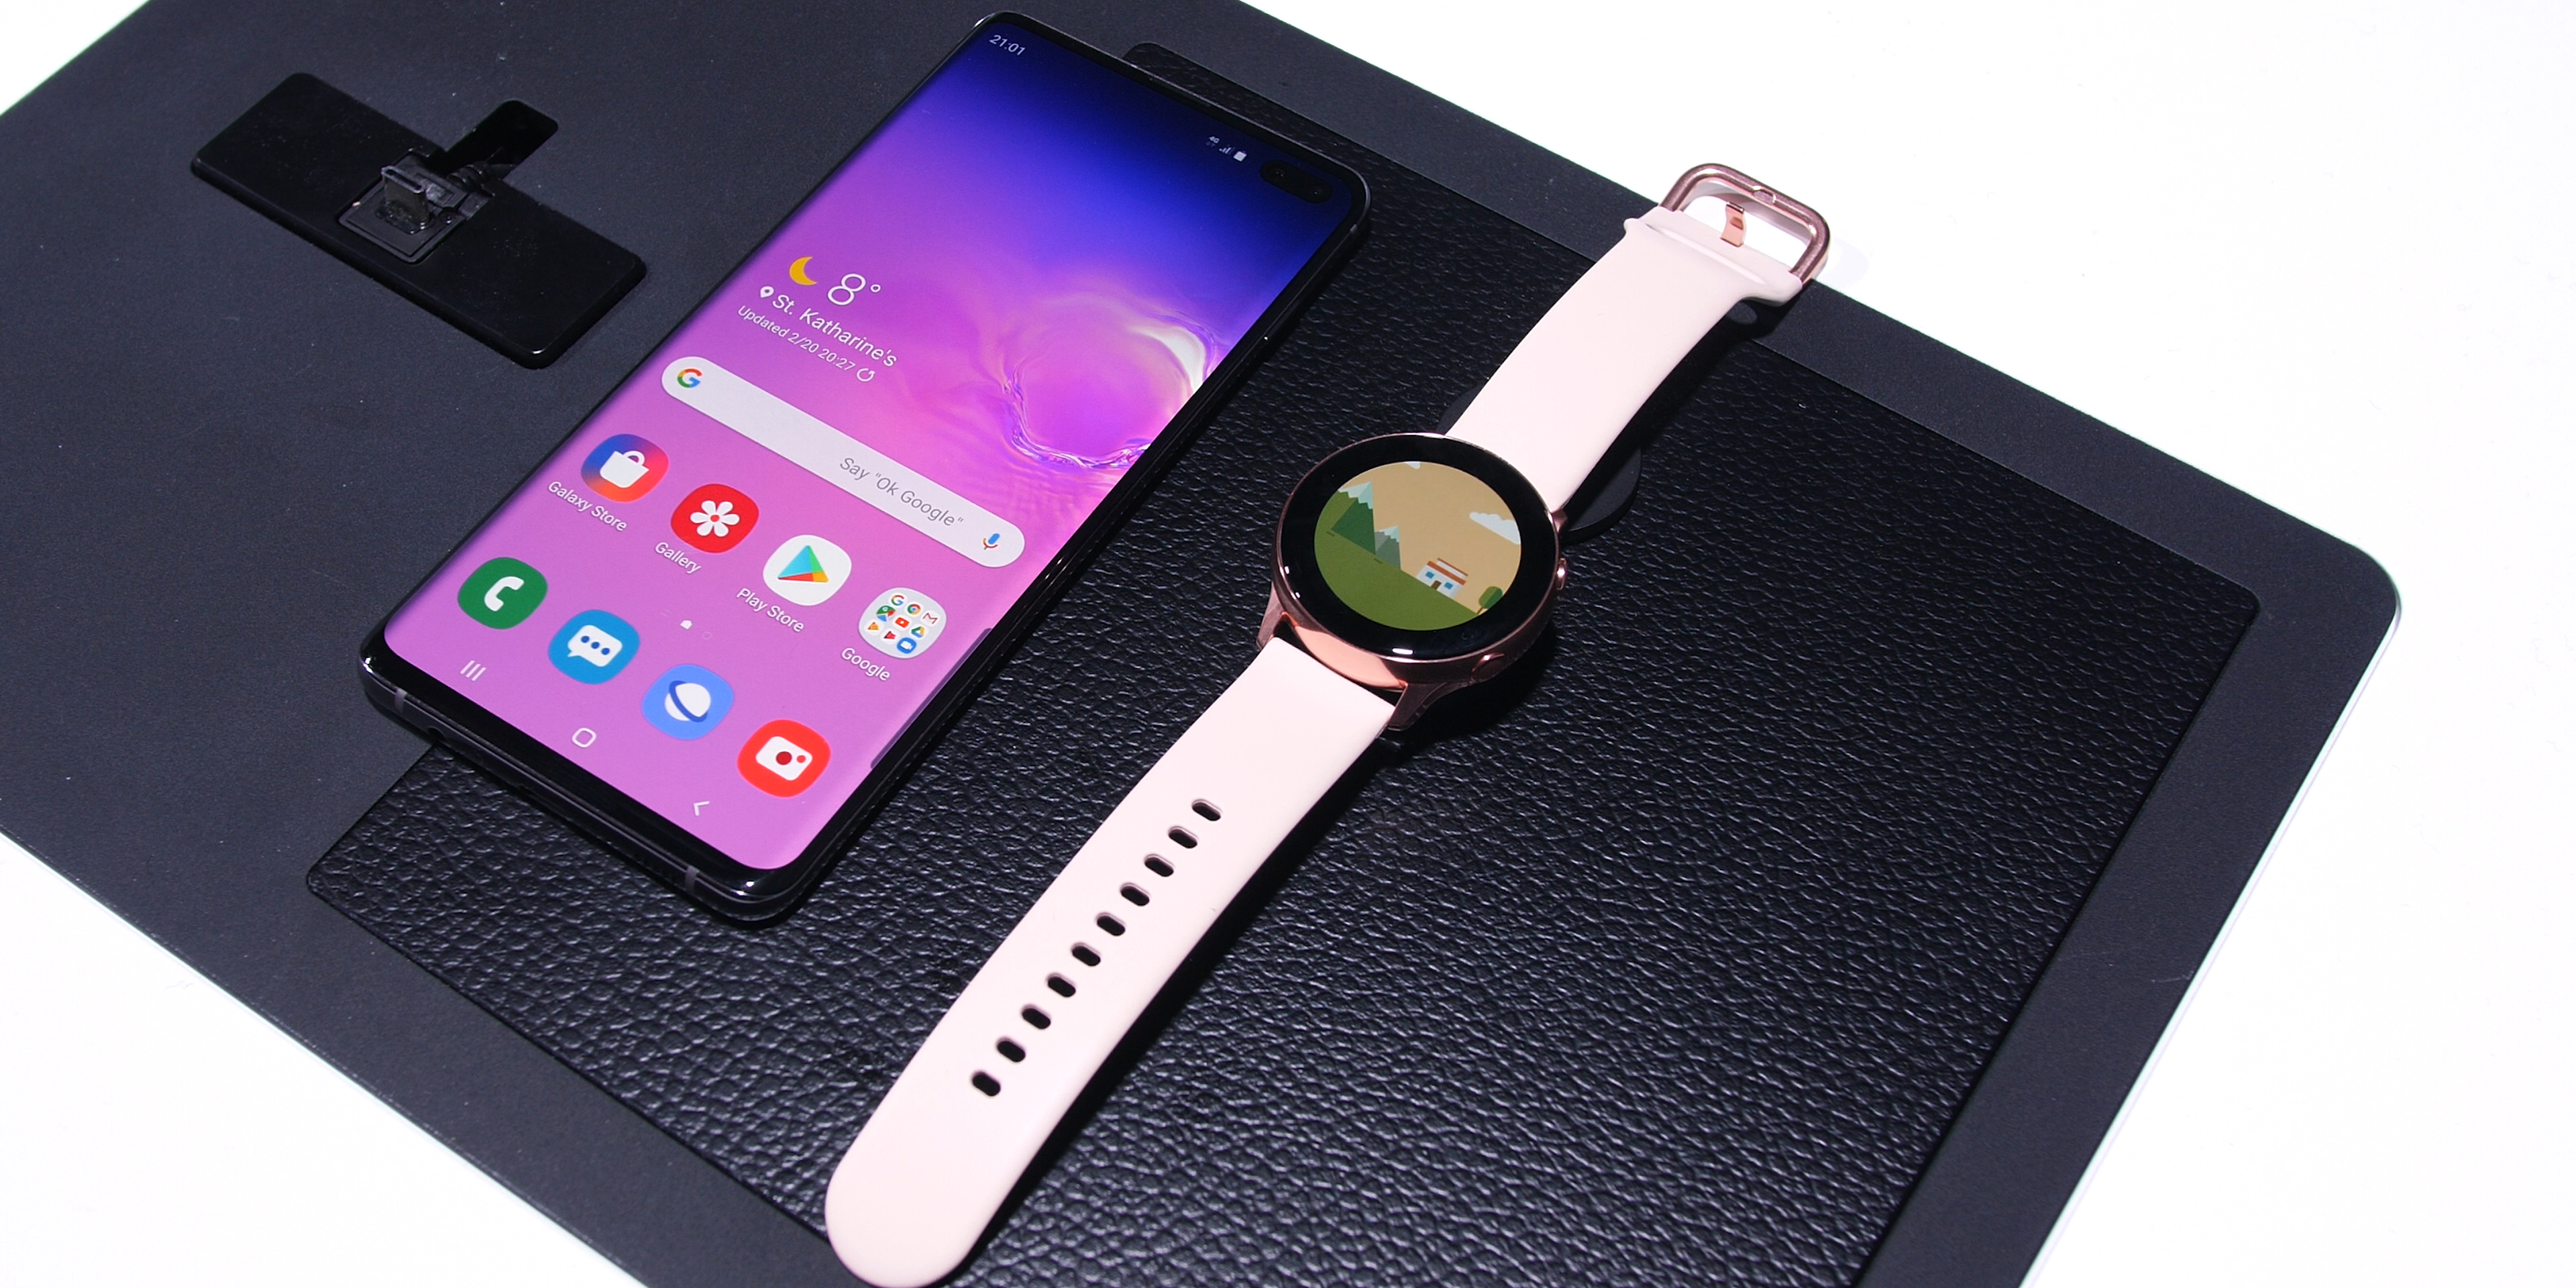 Samsung Galaxy Watch Active hardware and design